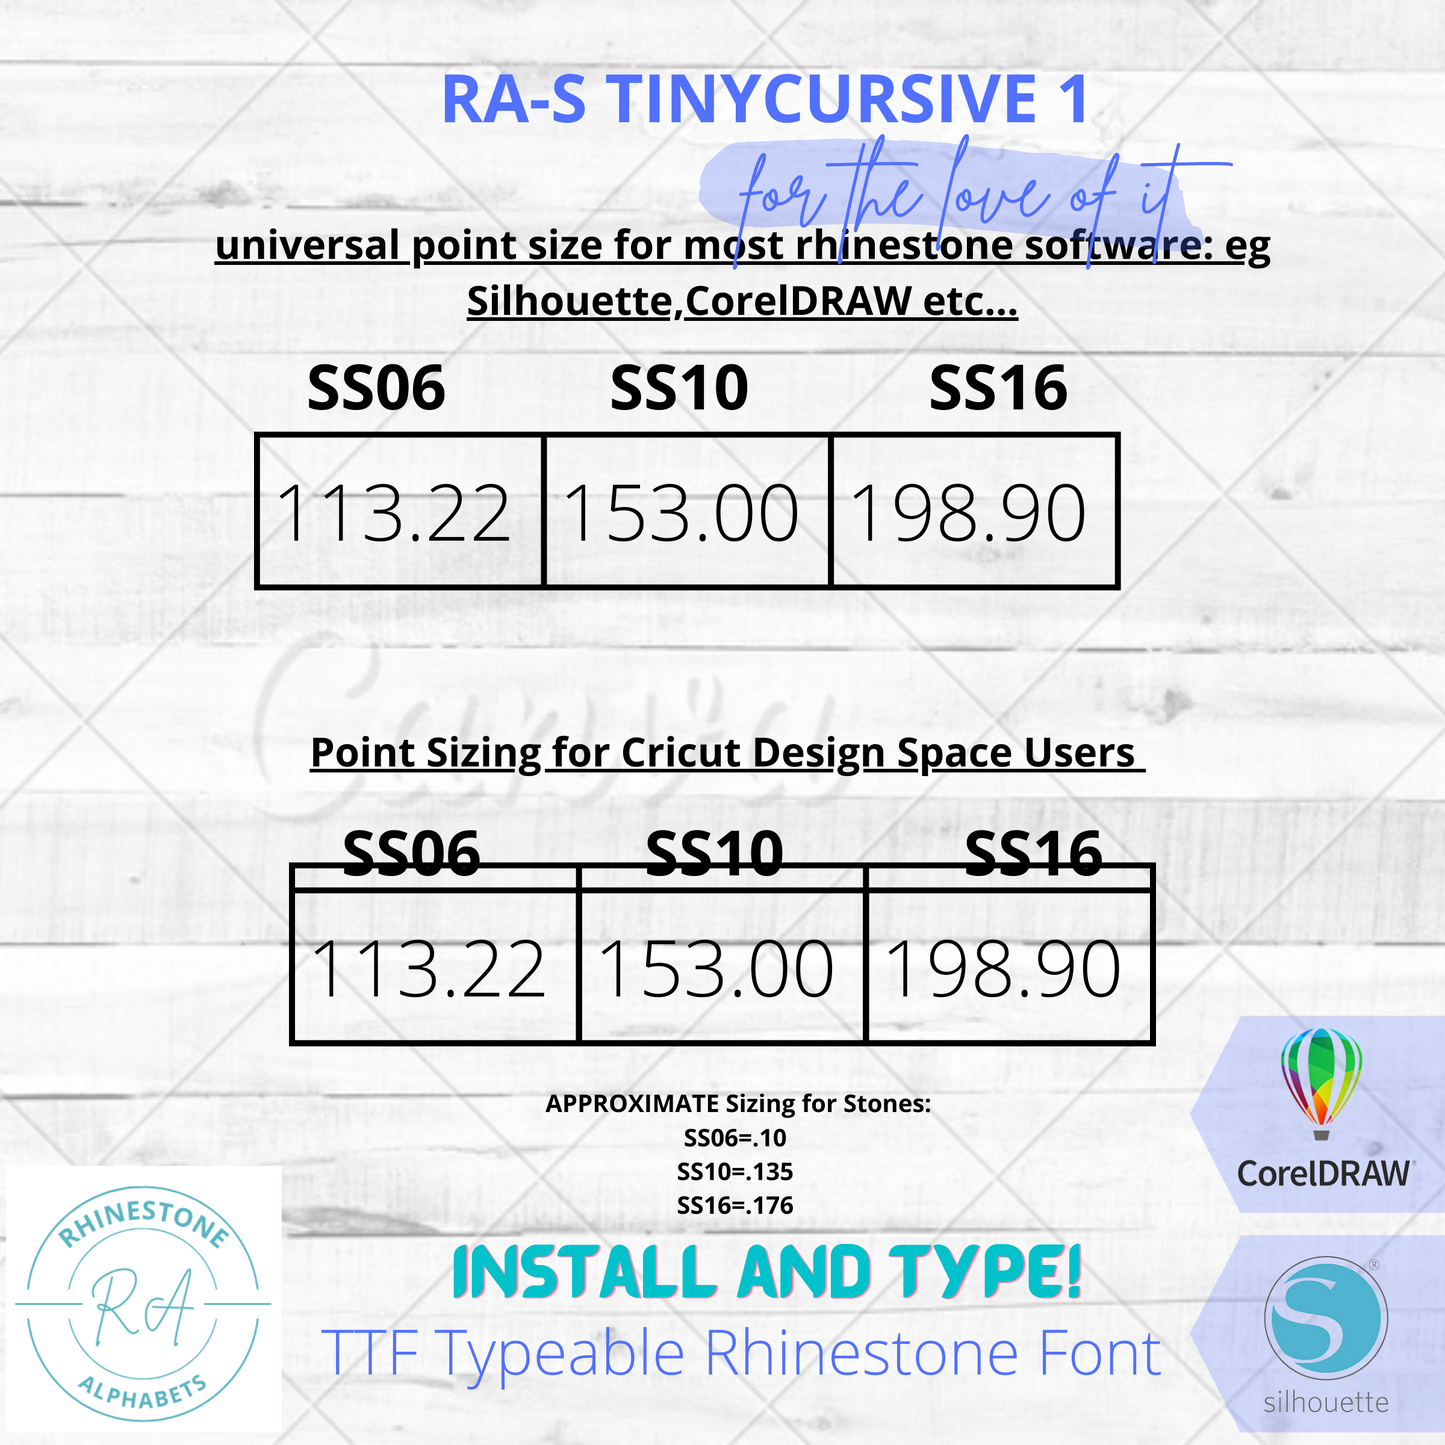 RA-S Tiny Cursive 1